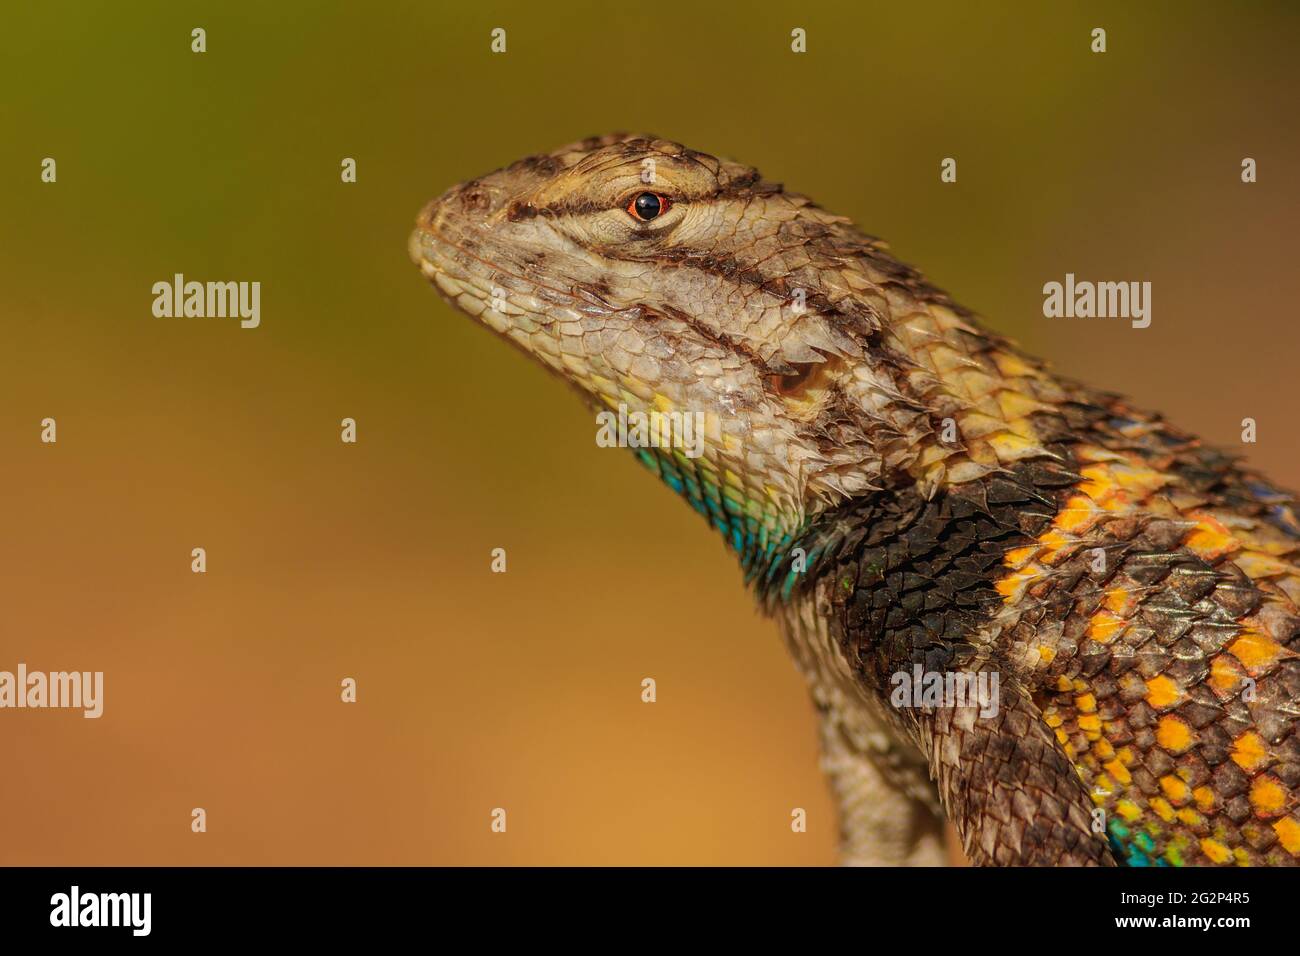 A portrait of a Desert Spiny Lizard. Stock Photo